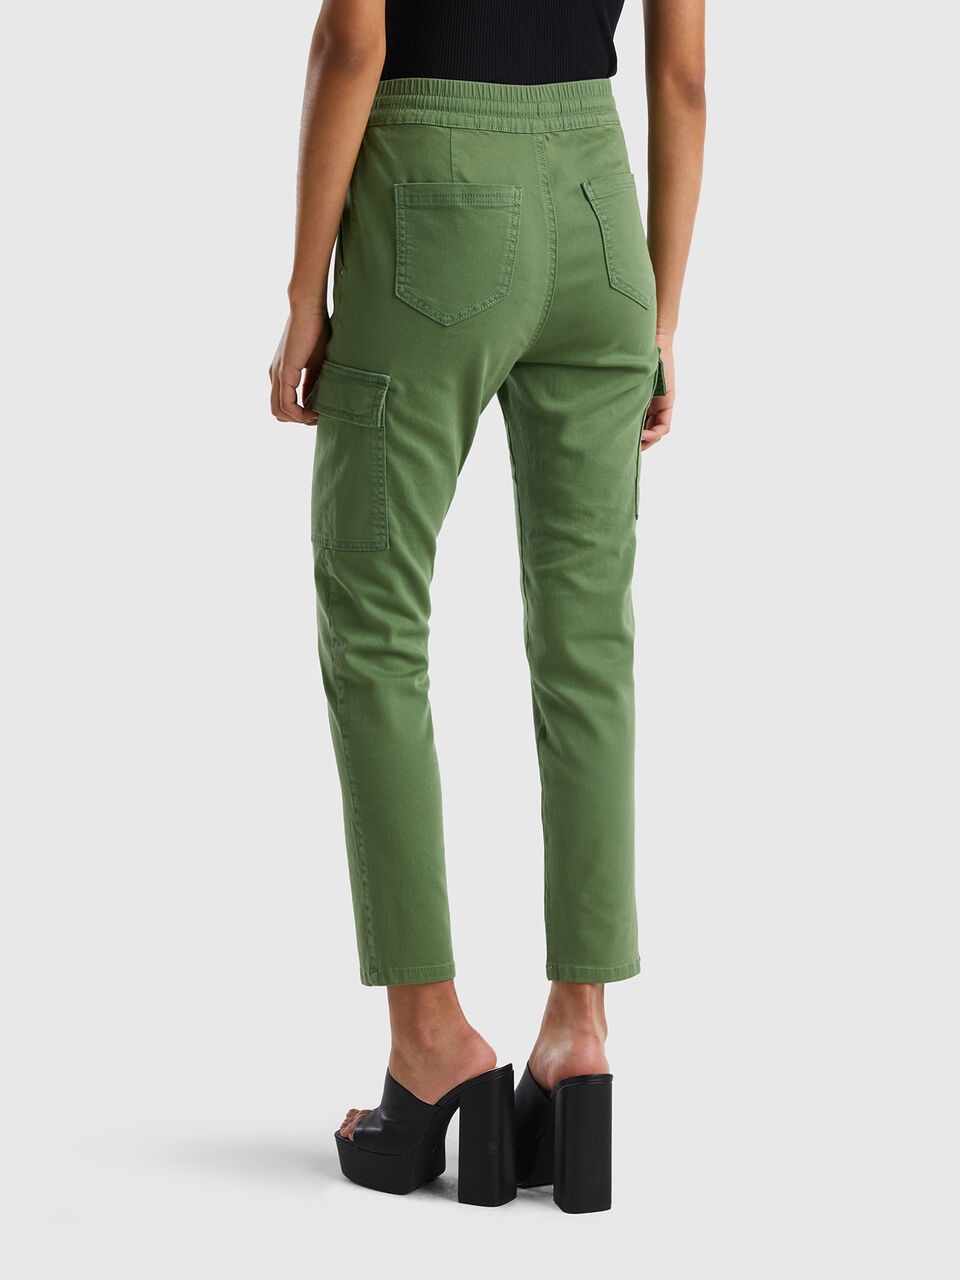 Selina Pantalones Cargo Mujer Caqui Verde